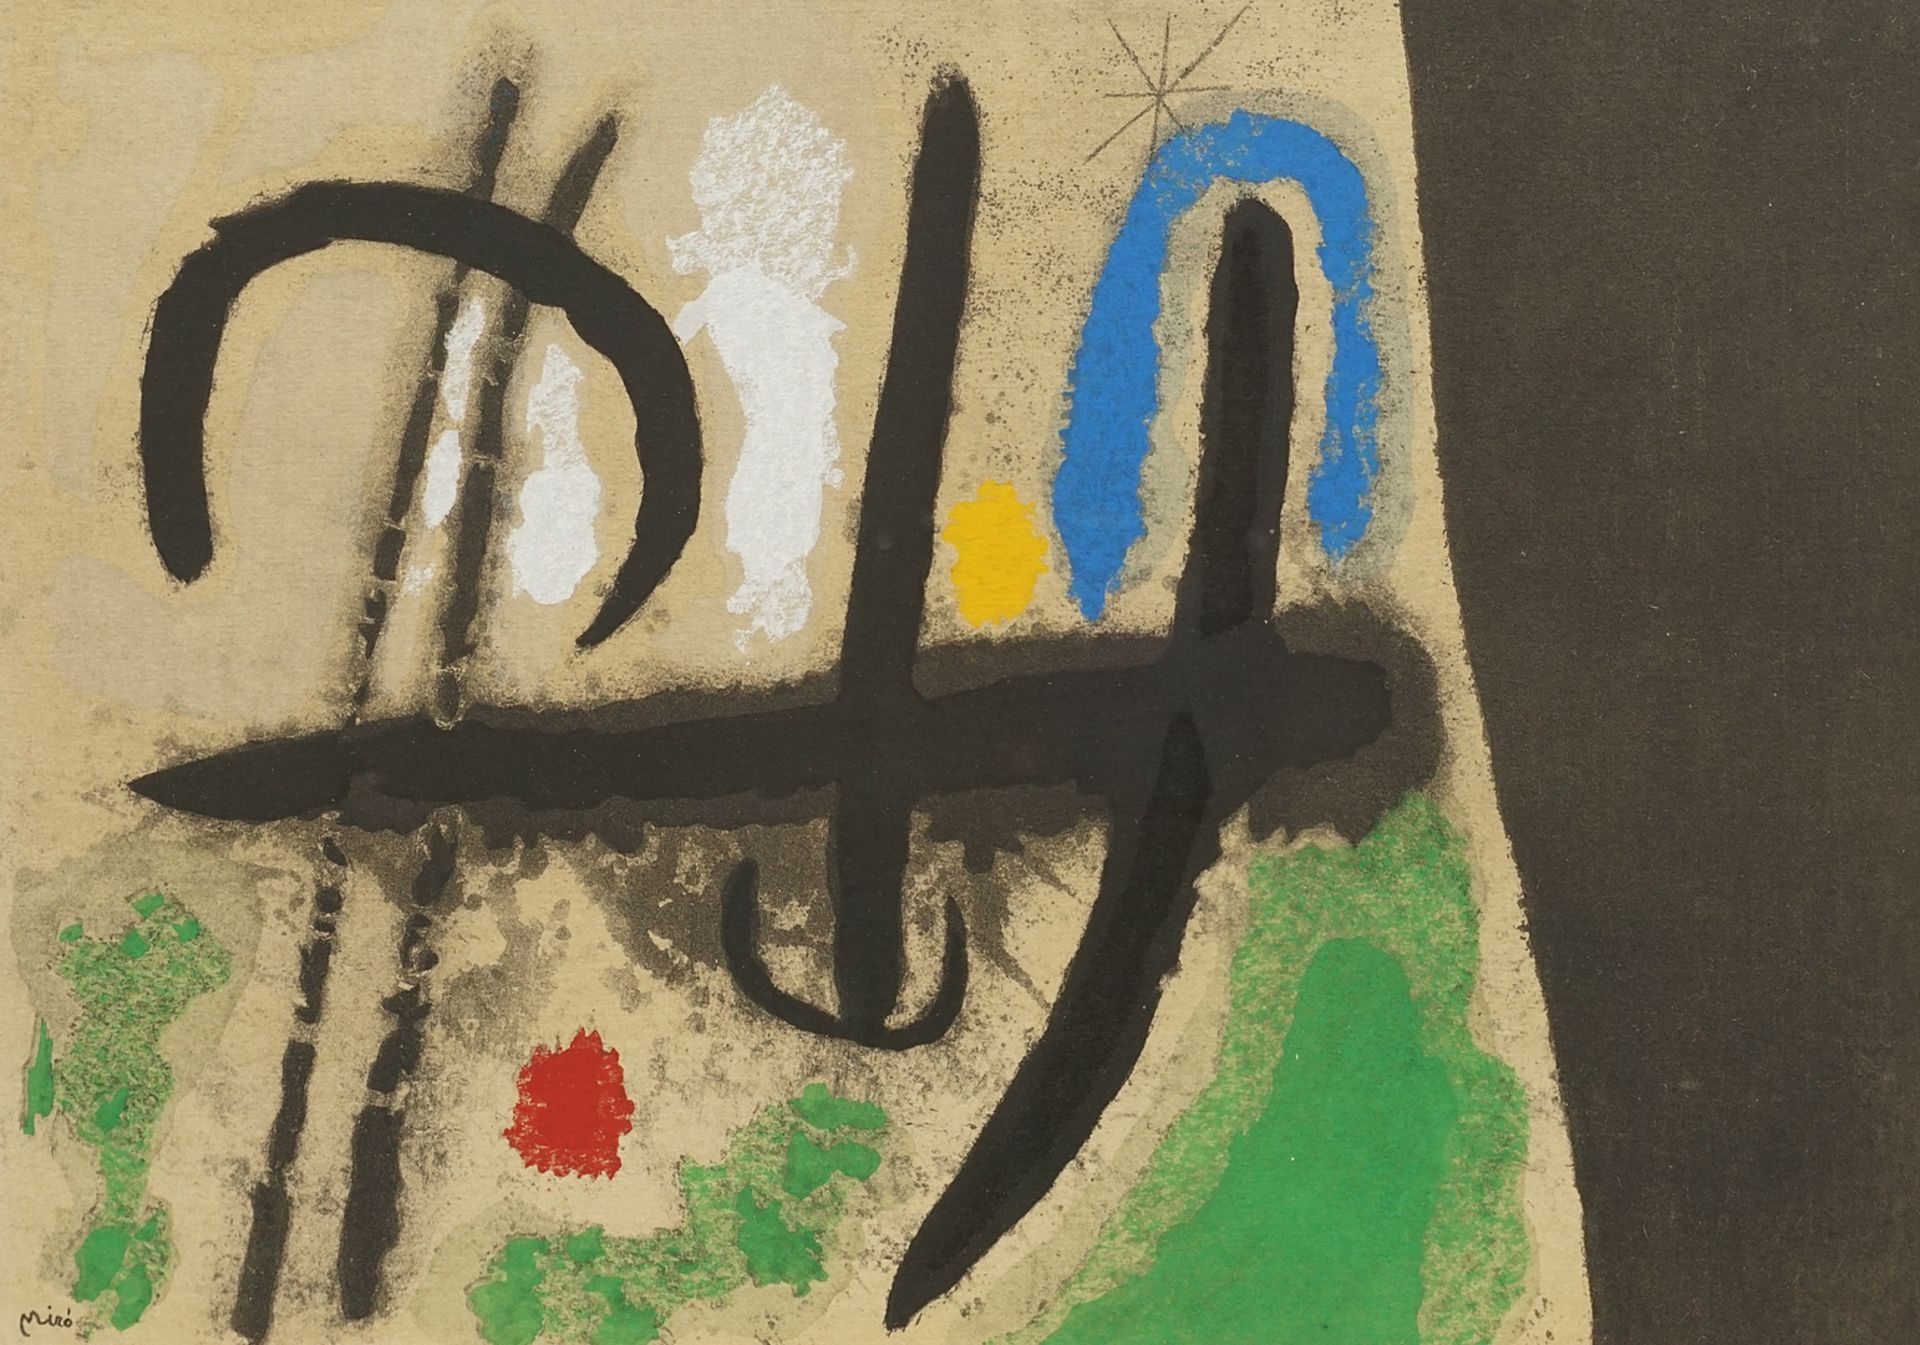 Joan Miró (1893-1983), "Oiseau dans un Paysage" (Bird in a Landscape)